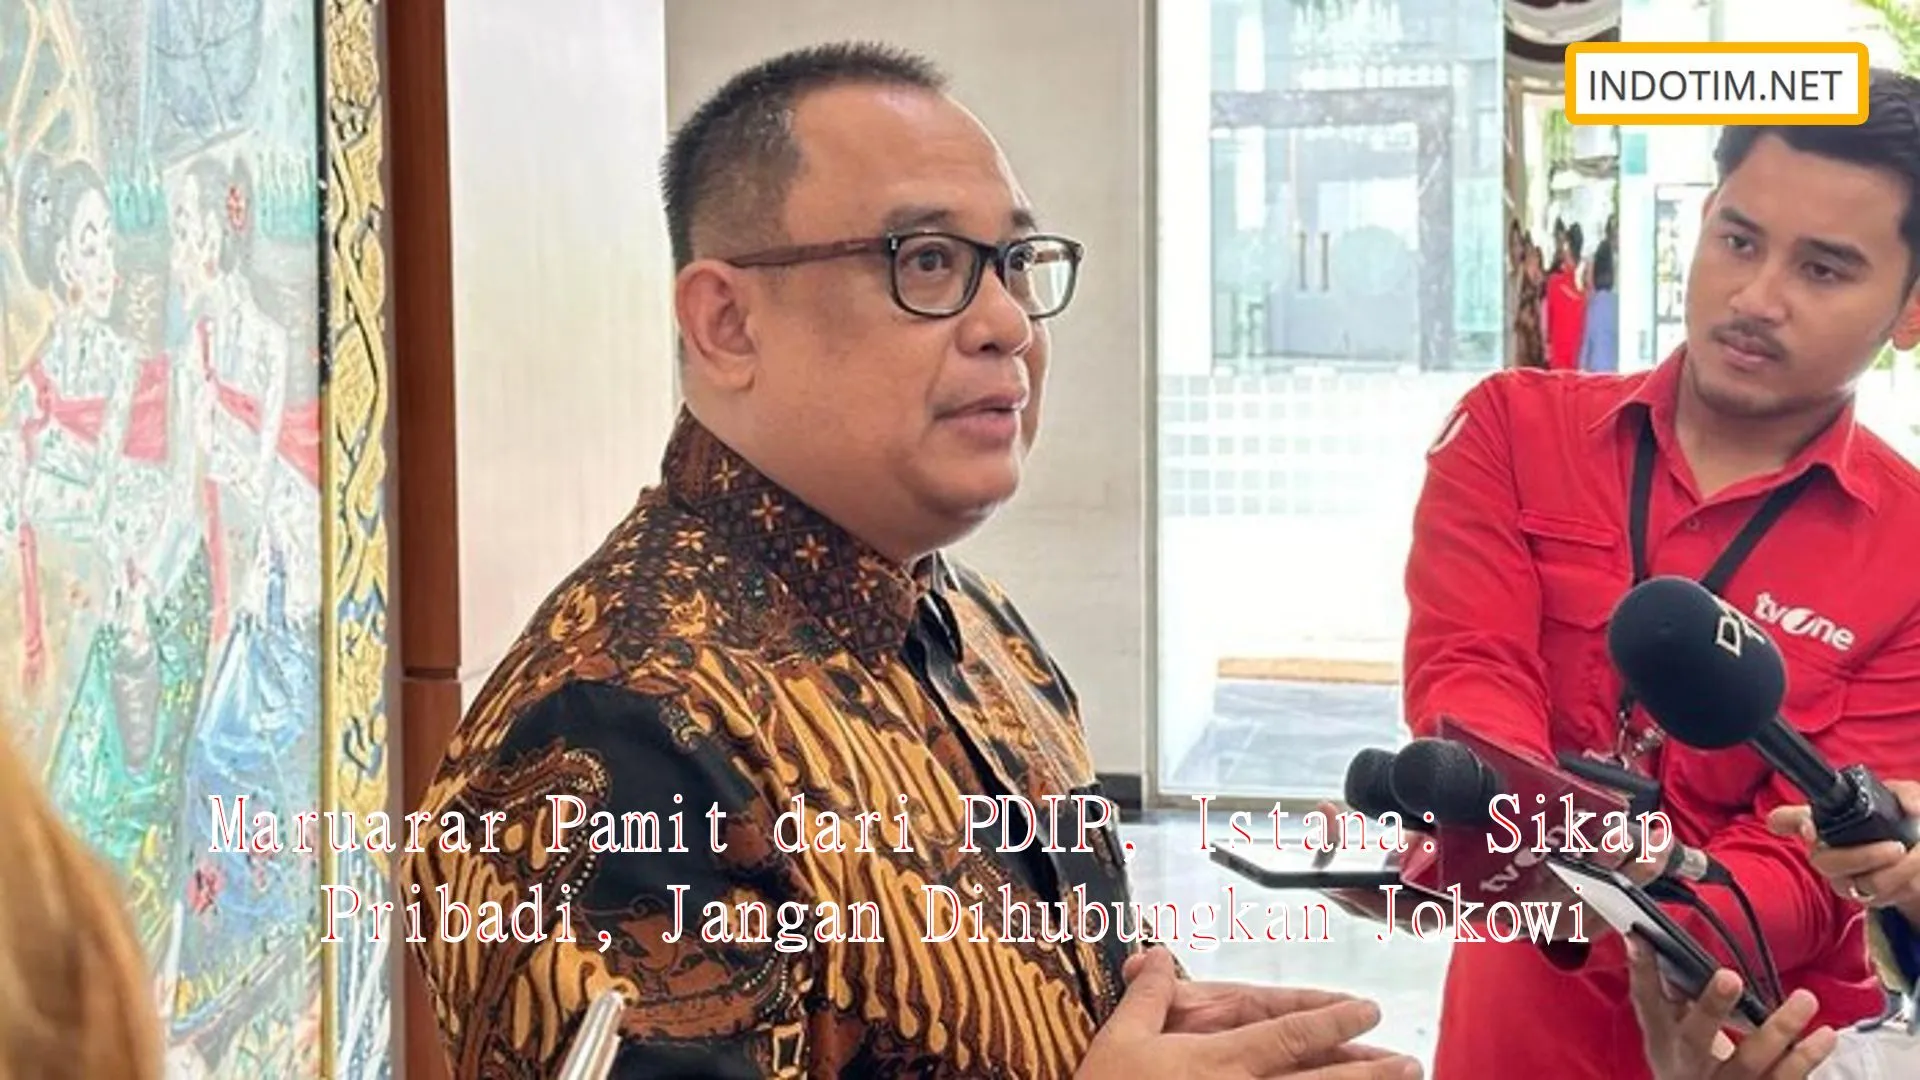 Maruarar Pamit dari PDIP, Istana: Sikap Pribadi, Jangan Dihubungkan Jokowi